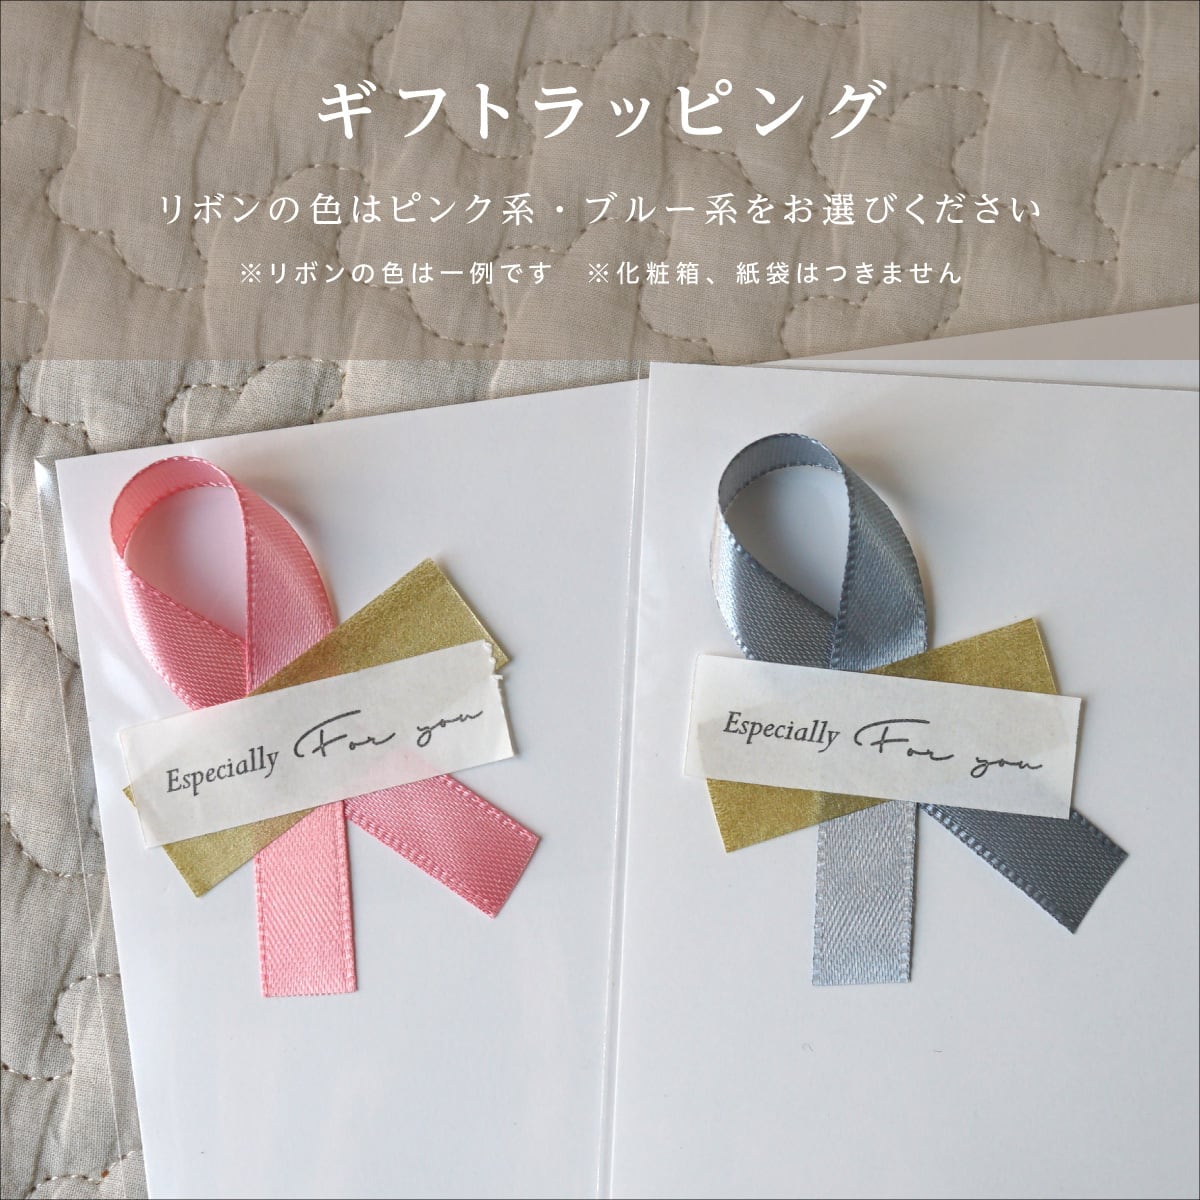 www.haoming.jp - ピンク】マンスリーカード 月齢カード 月齢フォト マイルストーンカード 価格比較